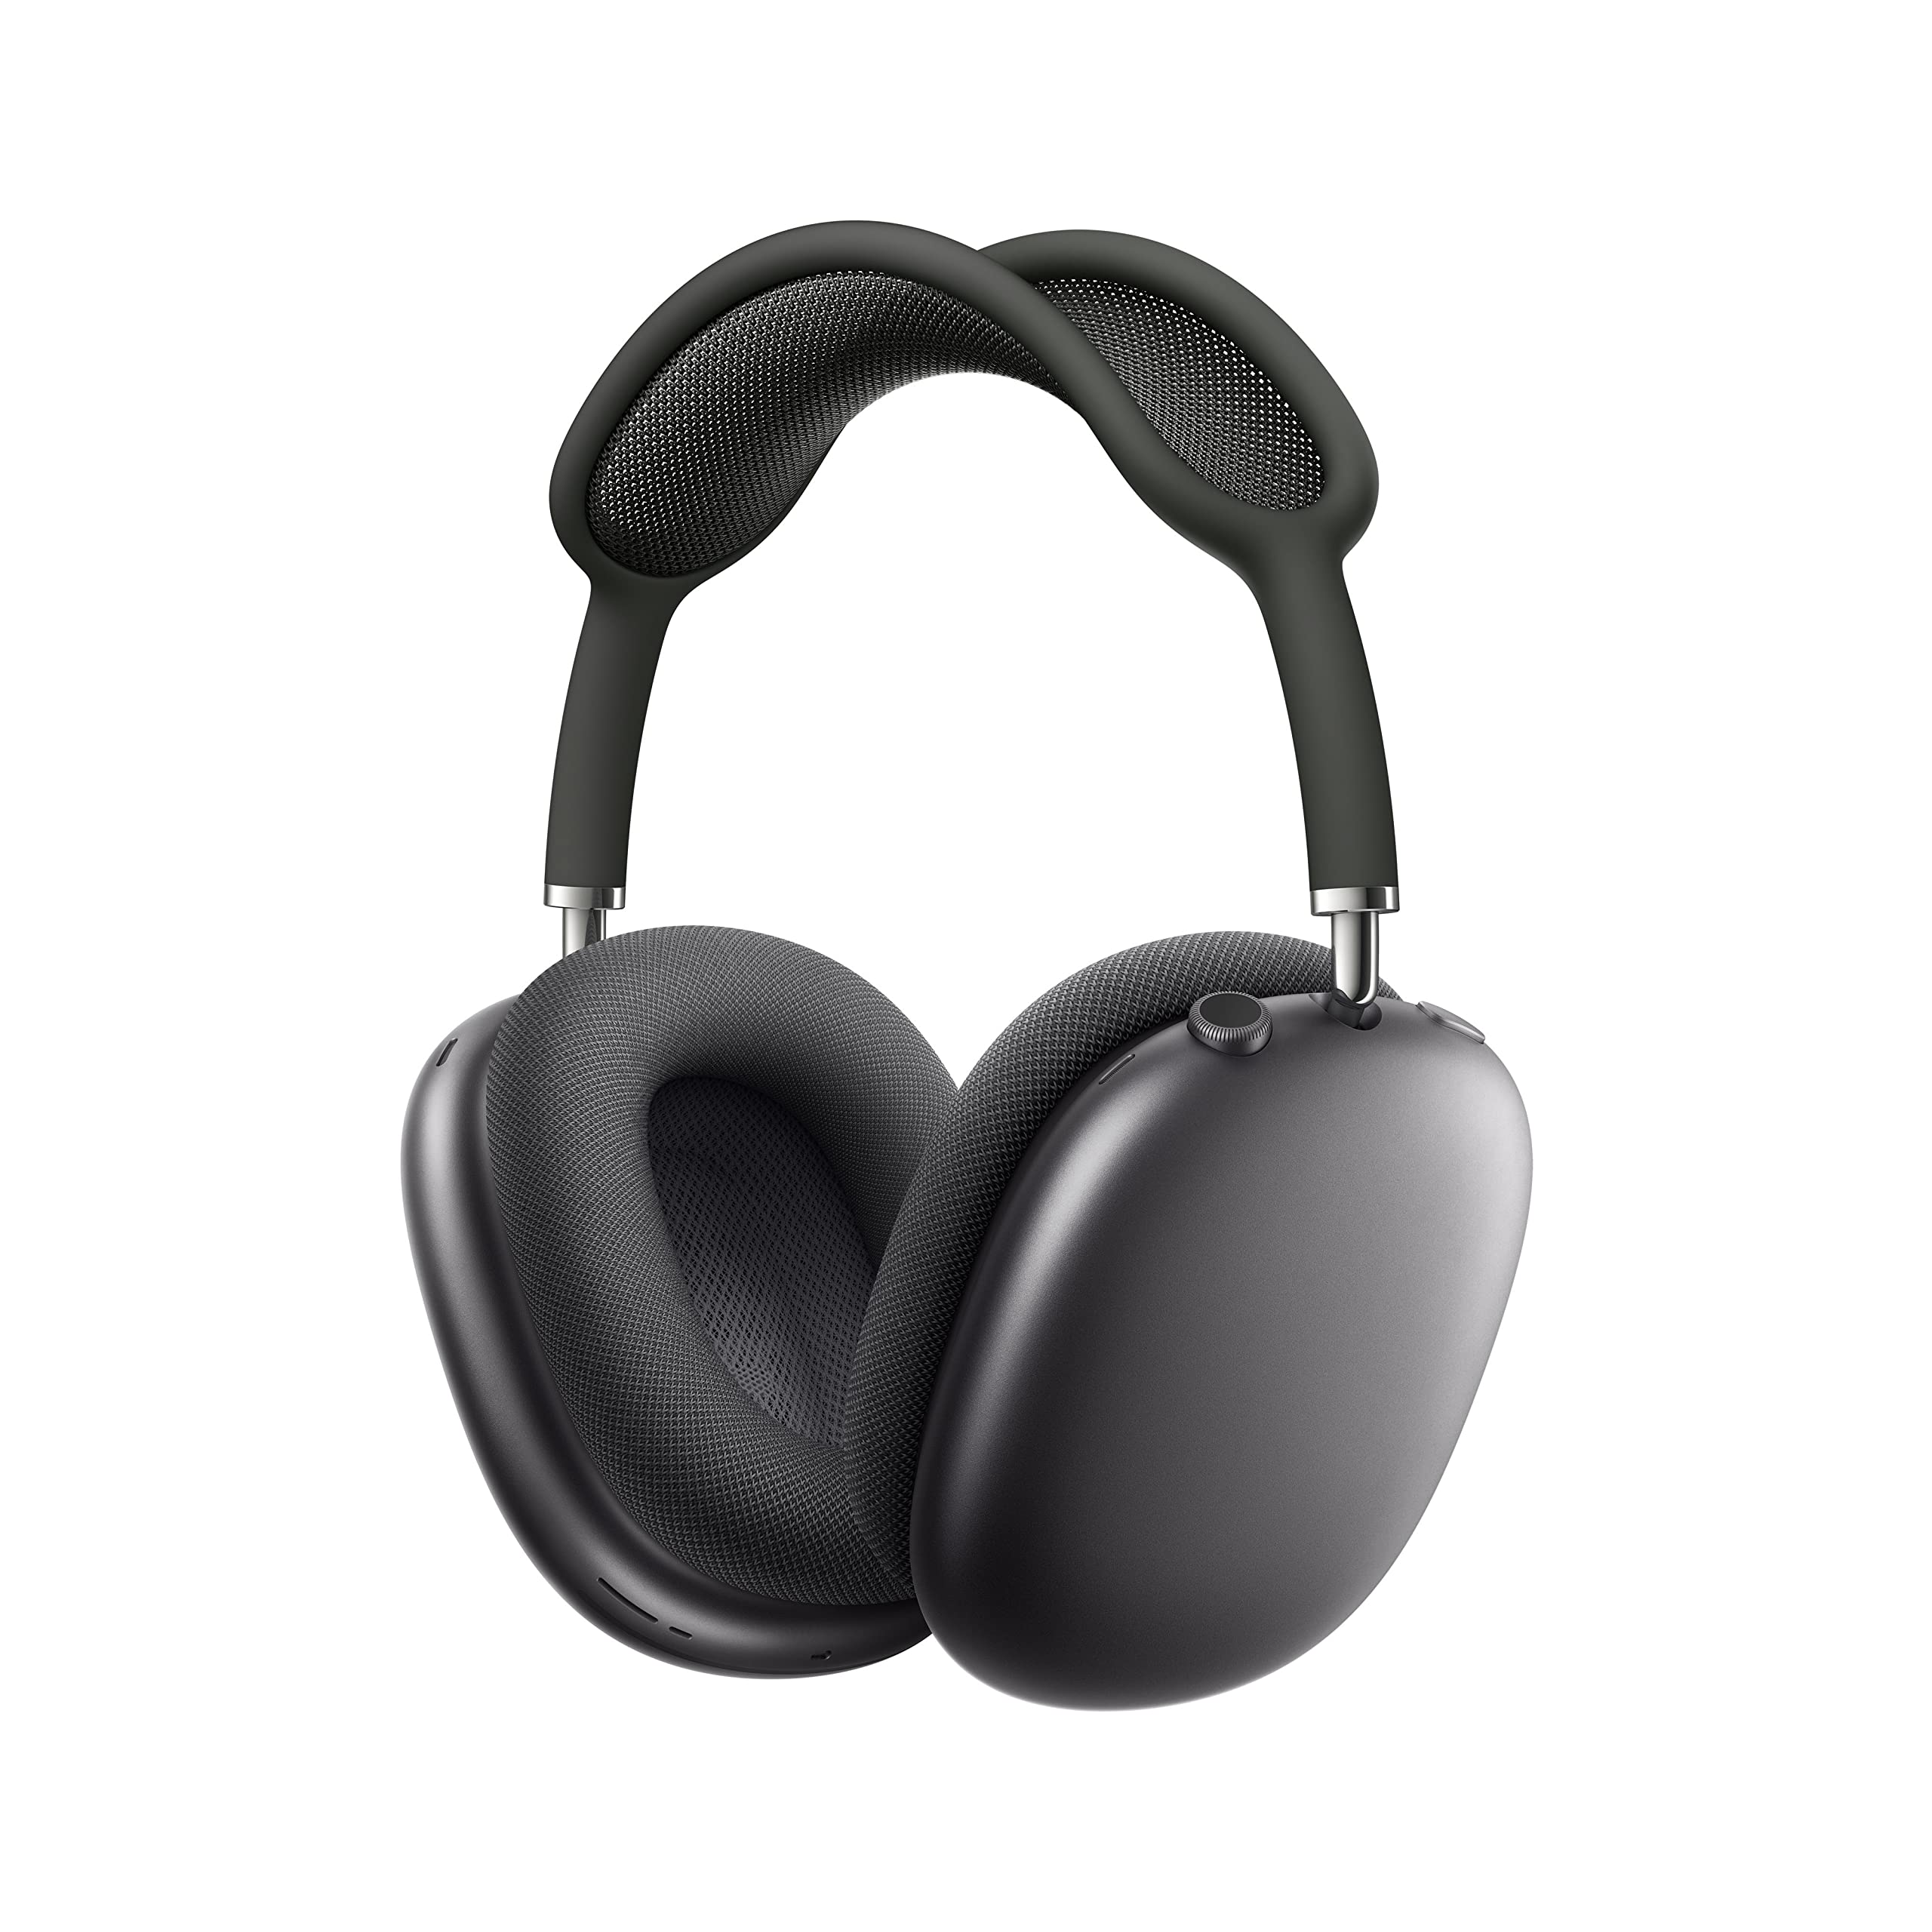 Max Wireless Over-Ear Headphones